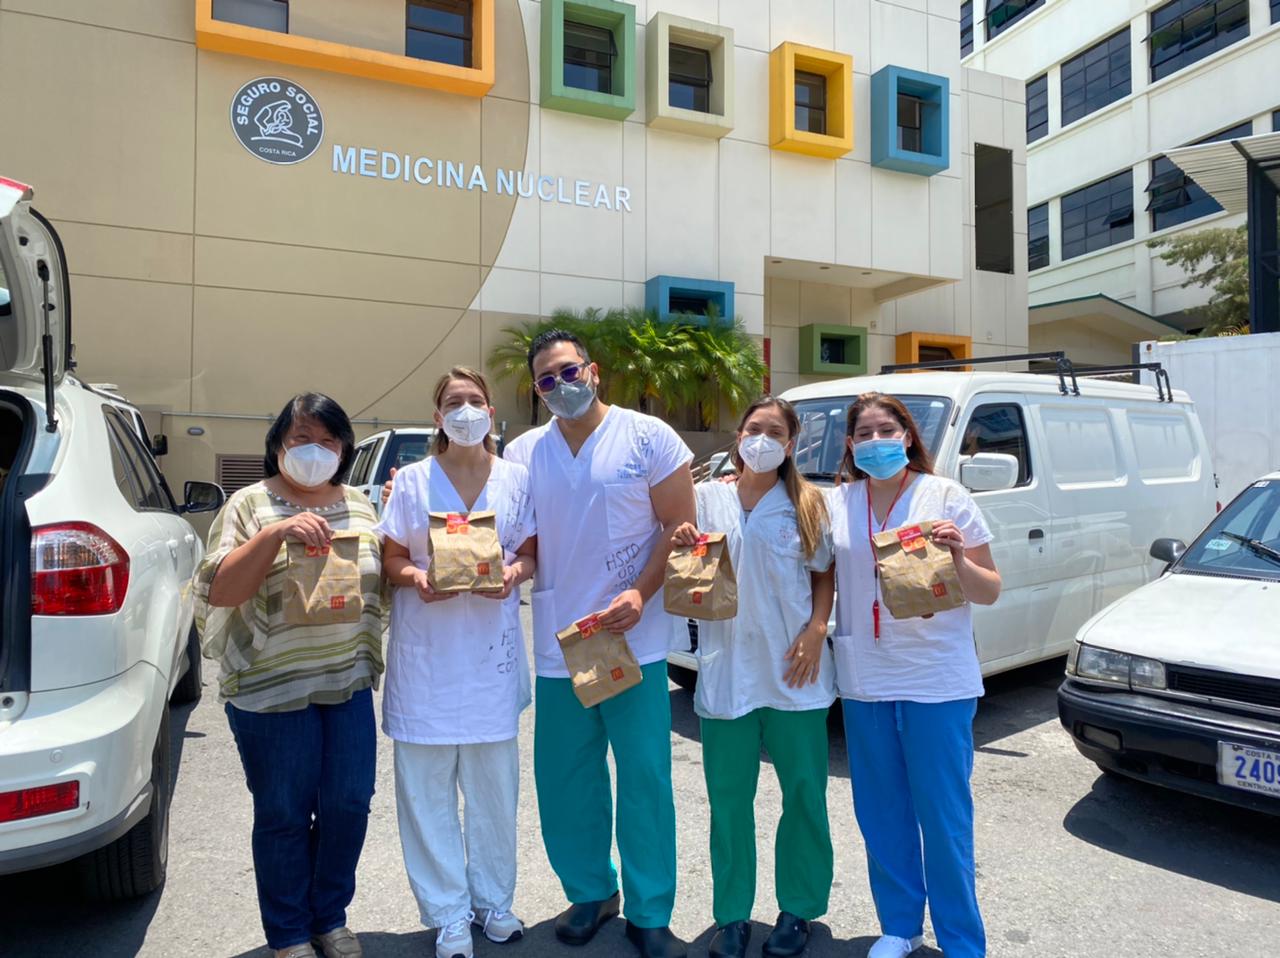 Arcos Dorados entregará 600 almuerzos de McDonald’s a personal de salud costarricense